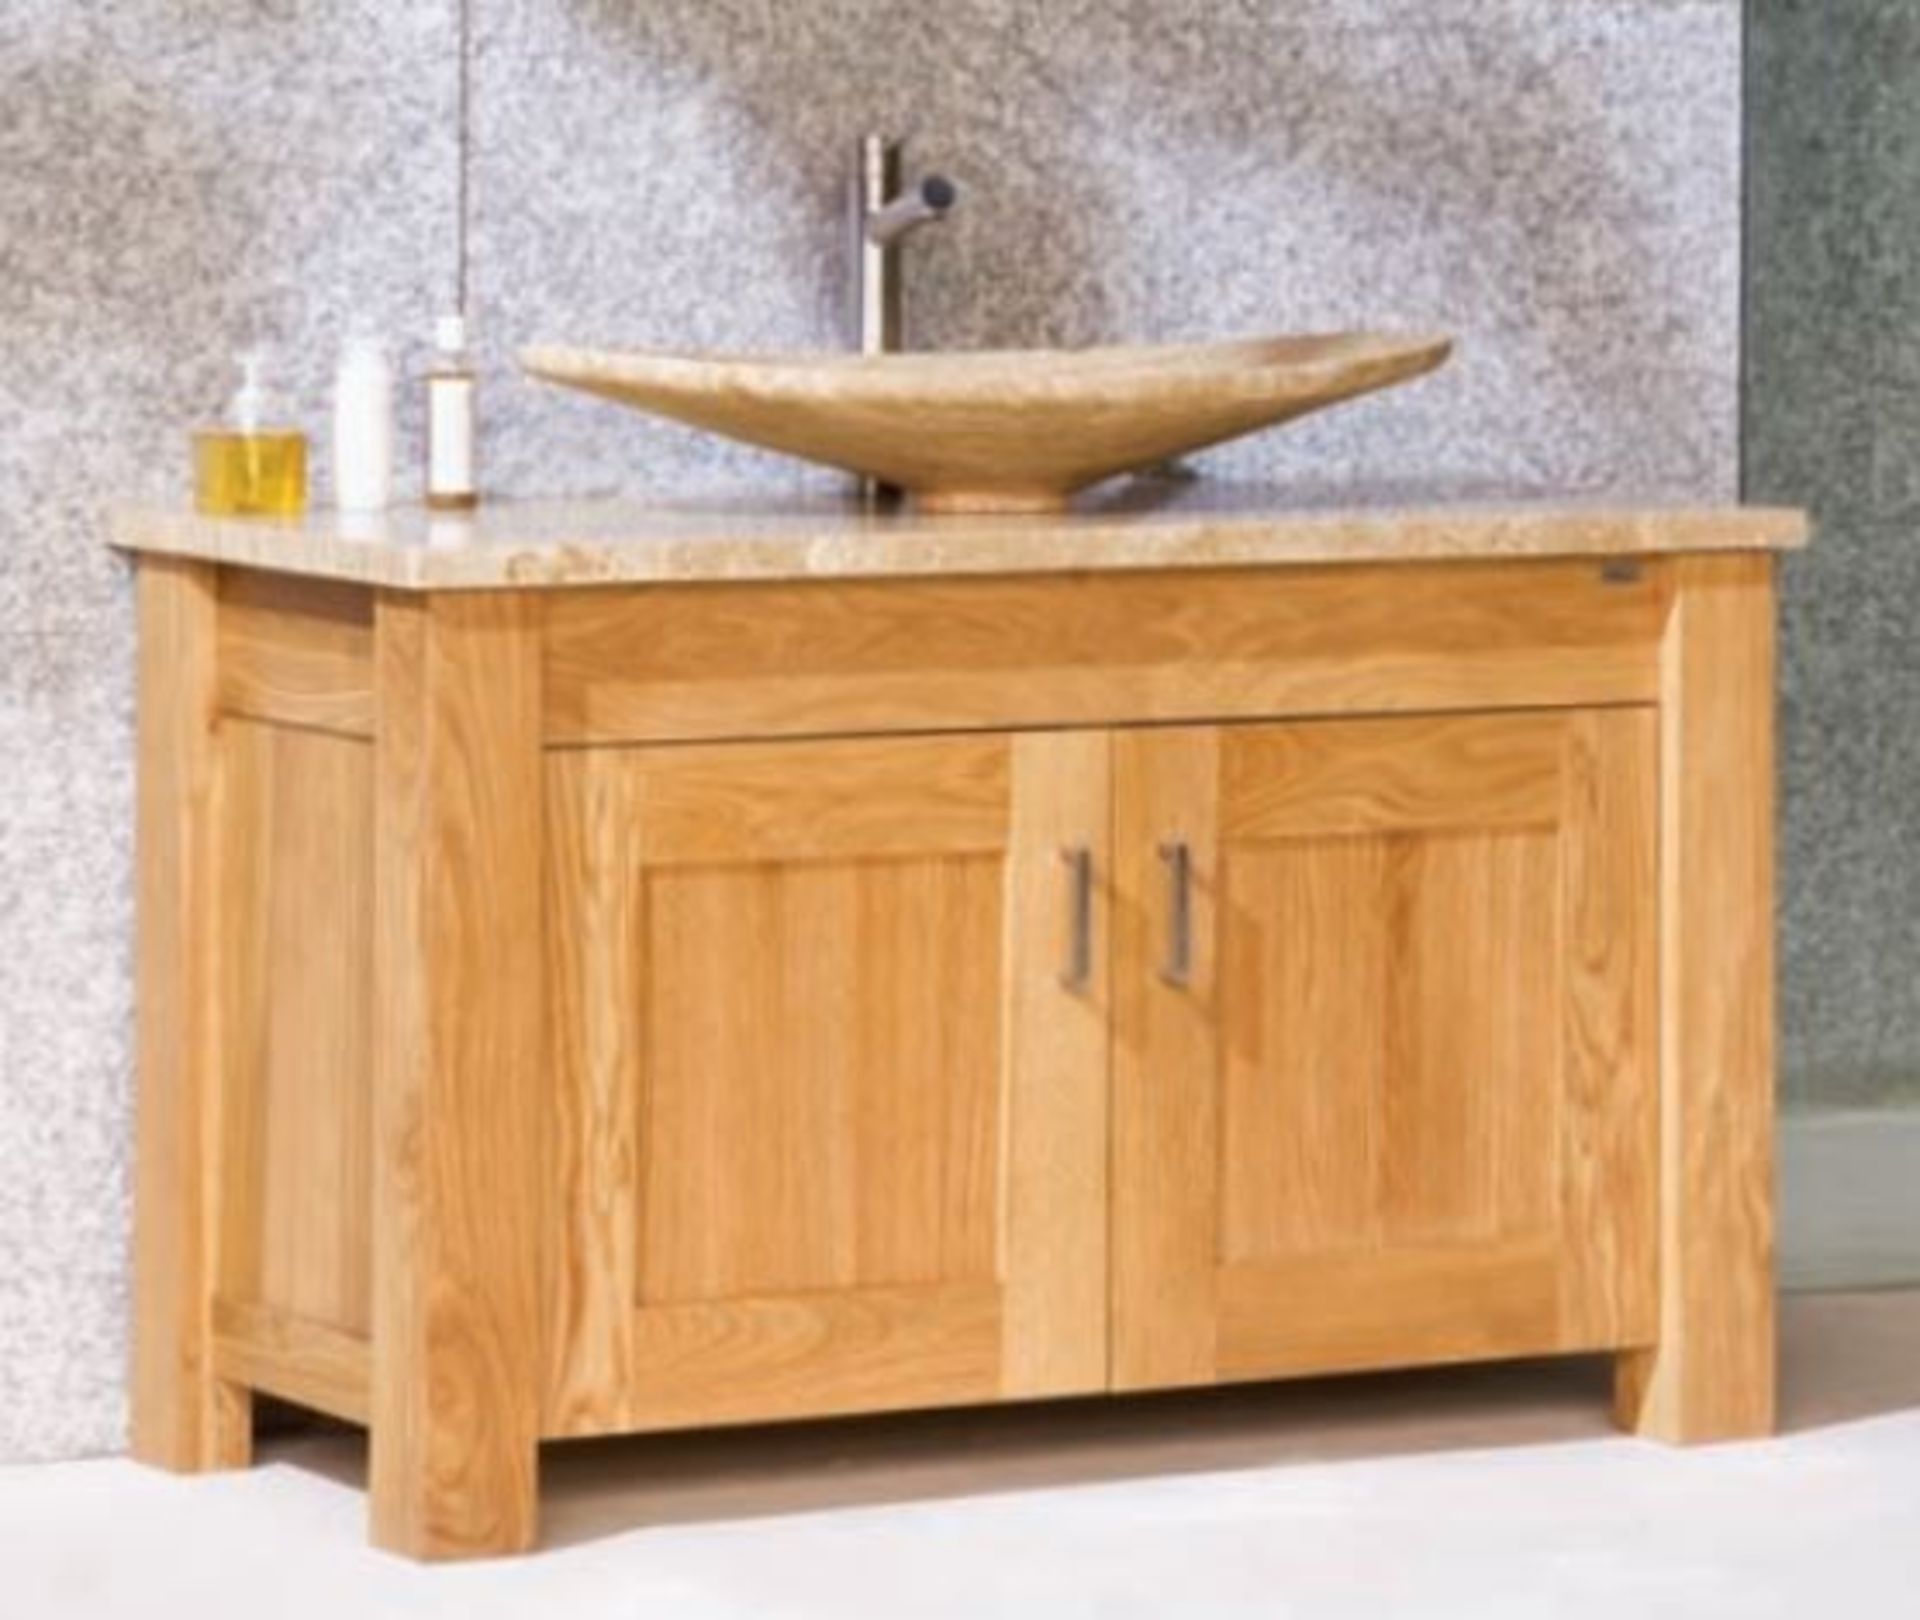 1 x Stonearth 'Finesse' Countertop Washstand - American Solid Oak - Original RRP £1,400 - Image 15 of 22